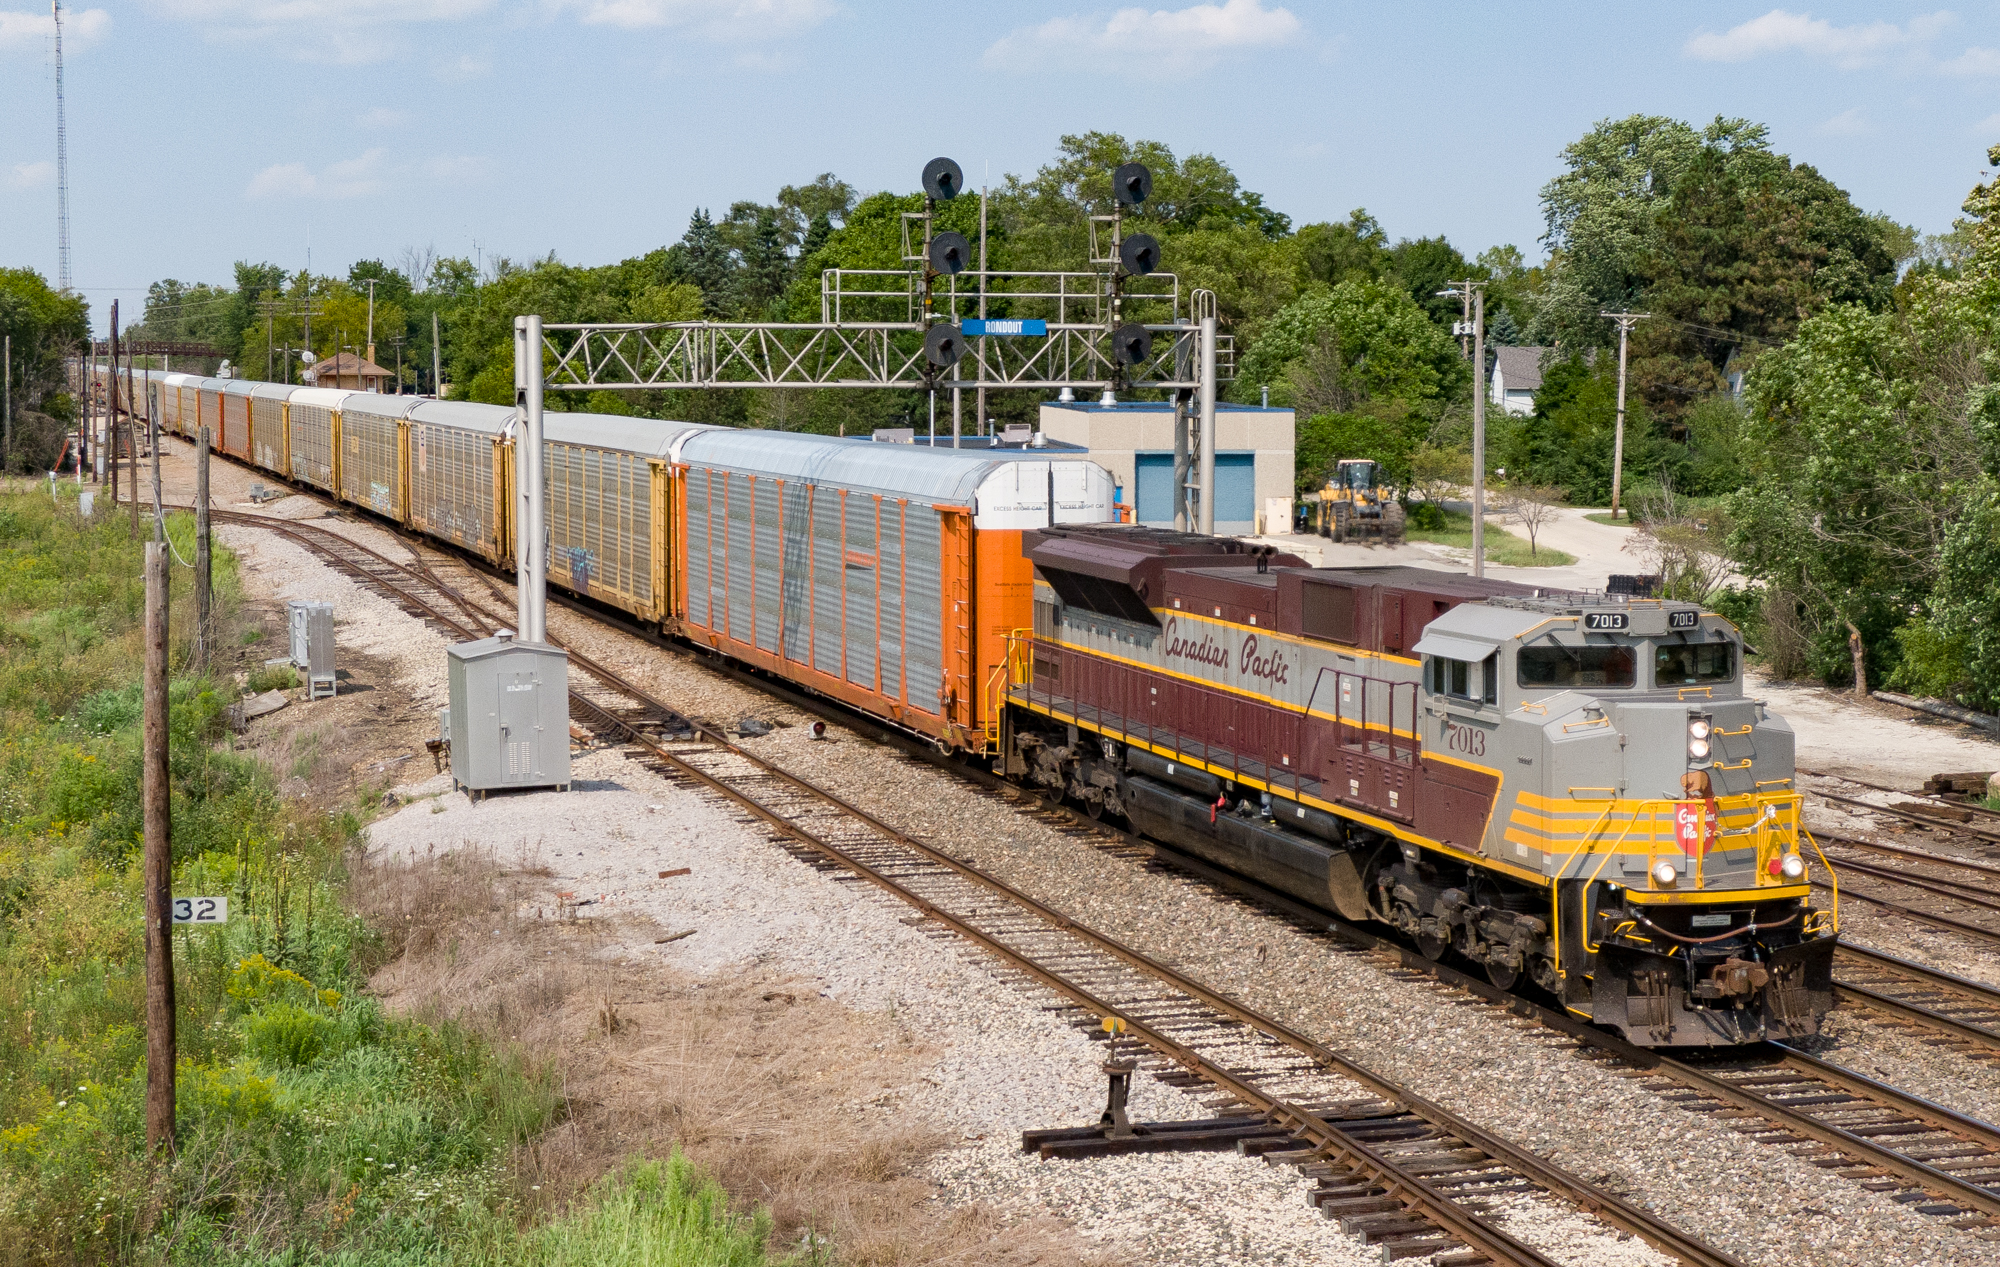 silver, orange and yellow locomotive